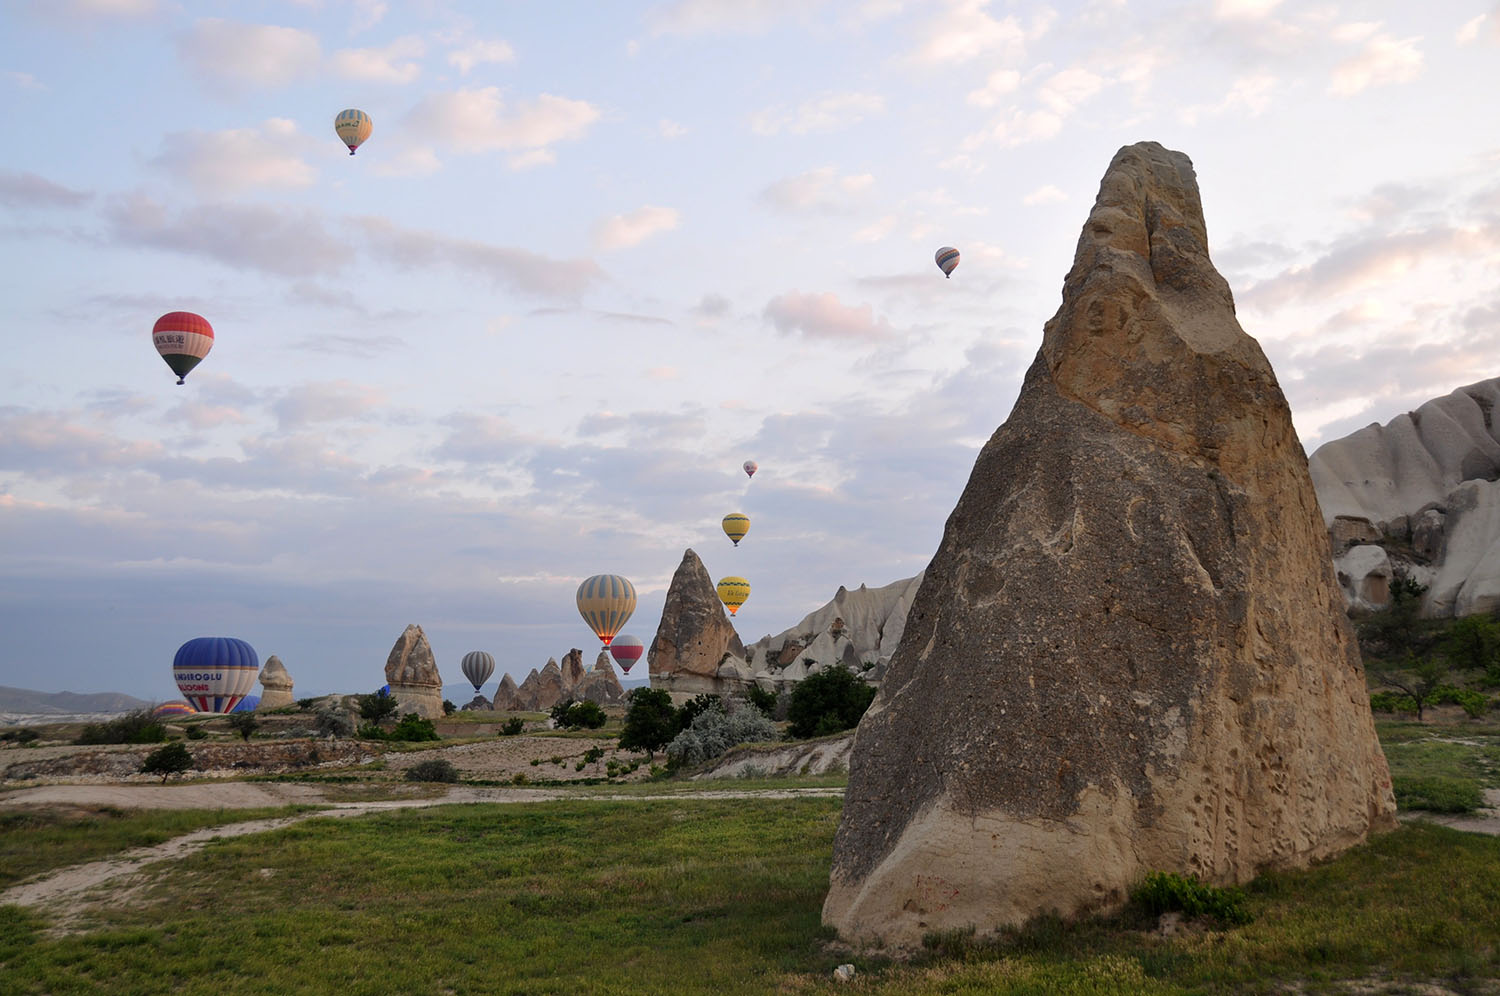 Rocks Hot Air Balloon Ride in Cappadocia Turkey with Turkiye Balloons